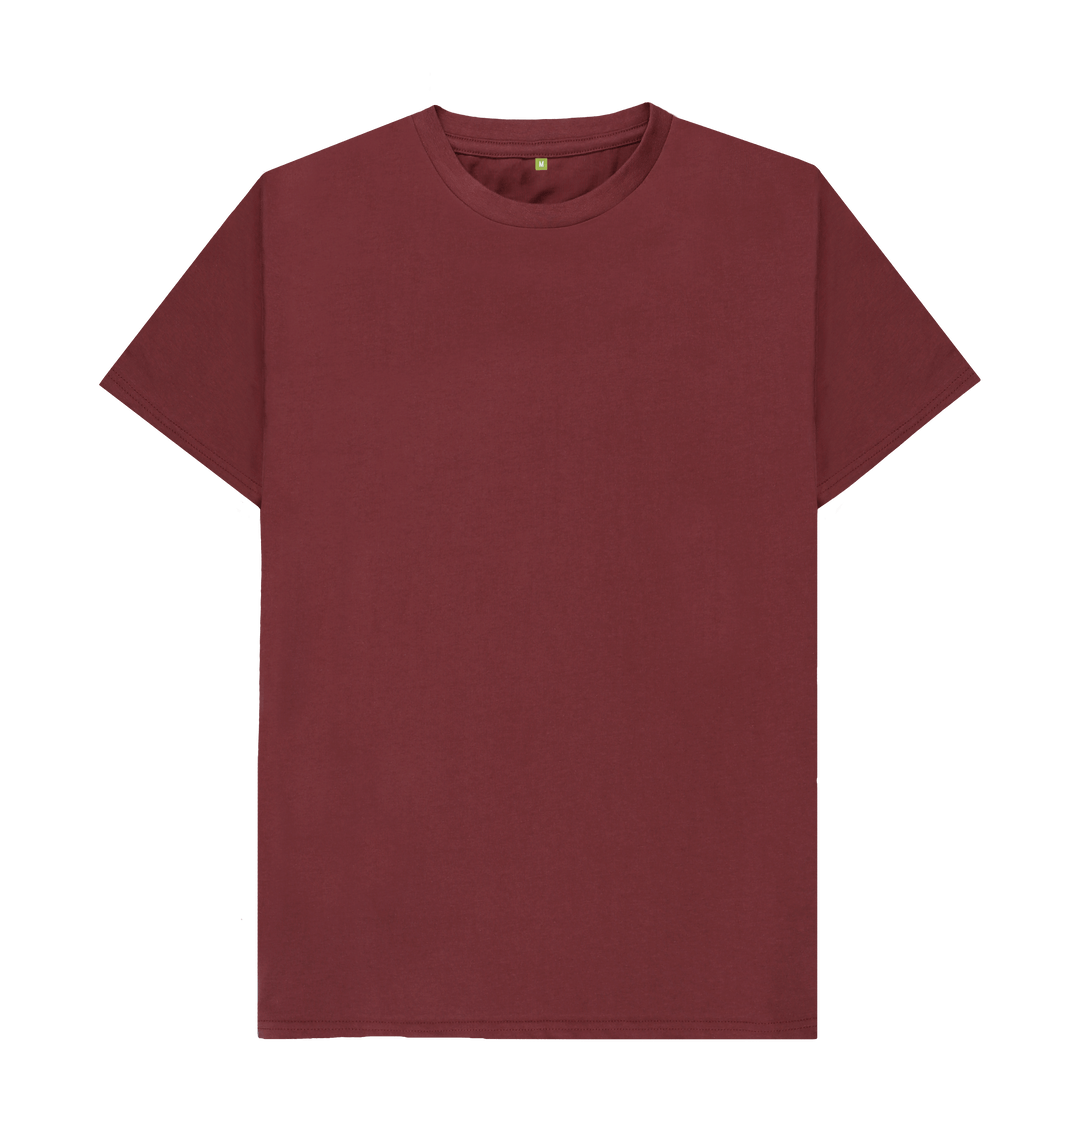 Saml op Antipoison Mars Men's basic T-Shirt